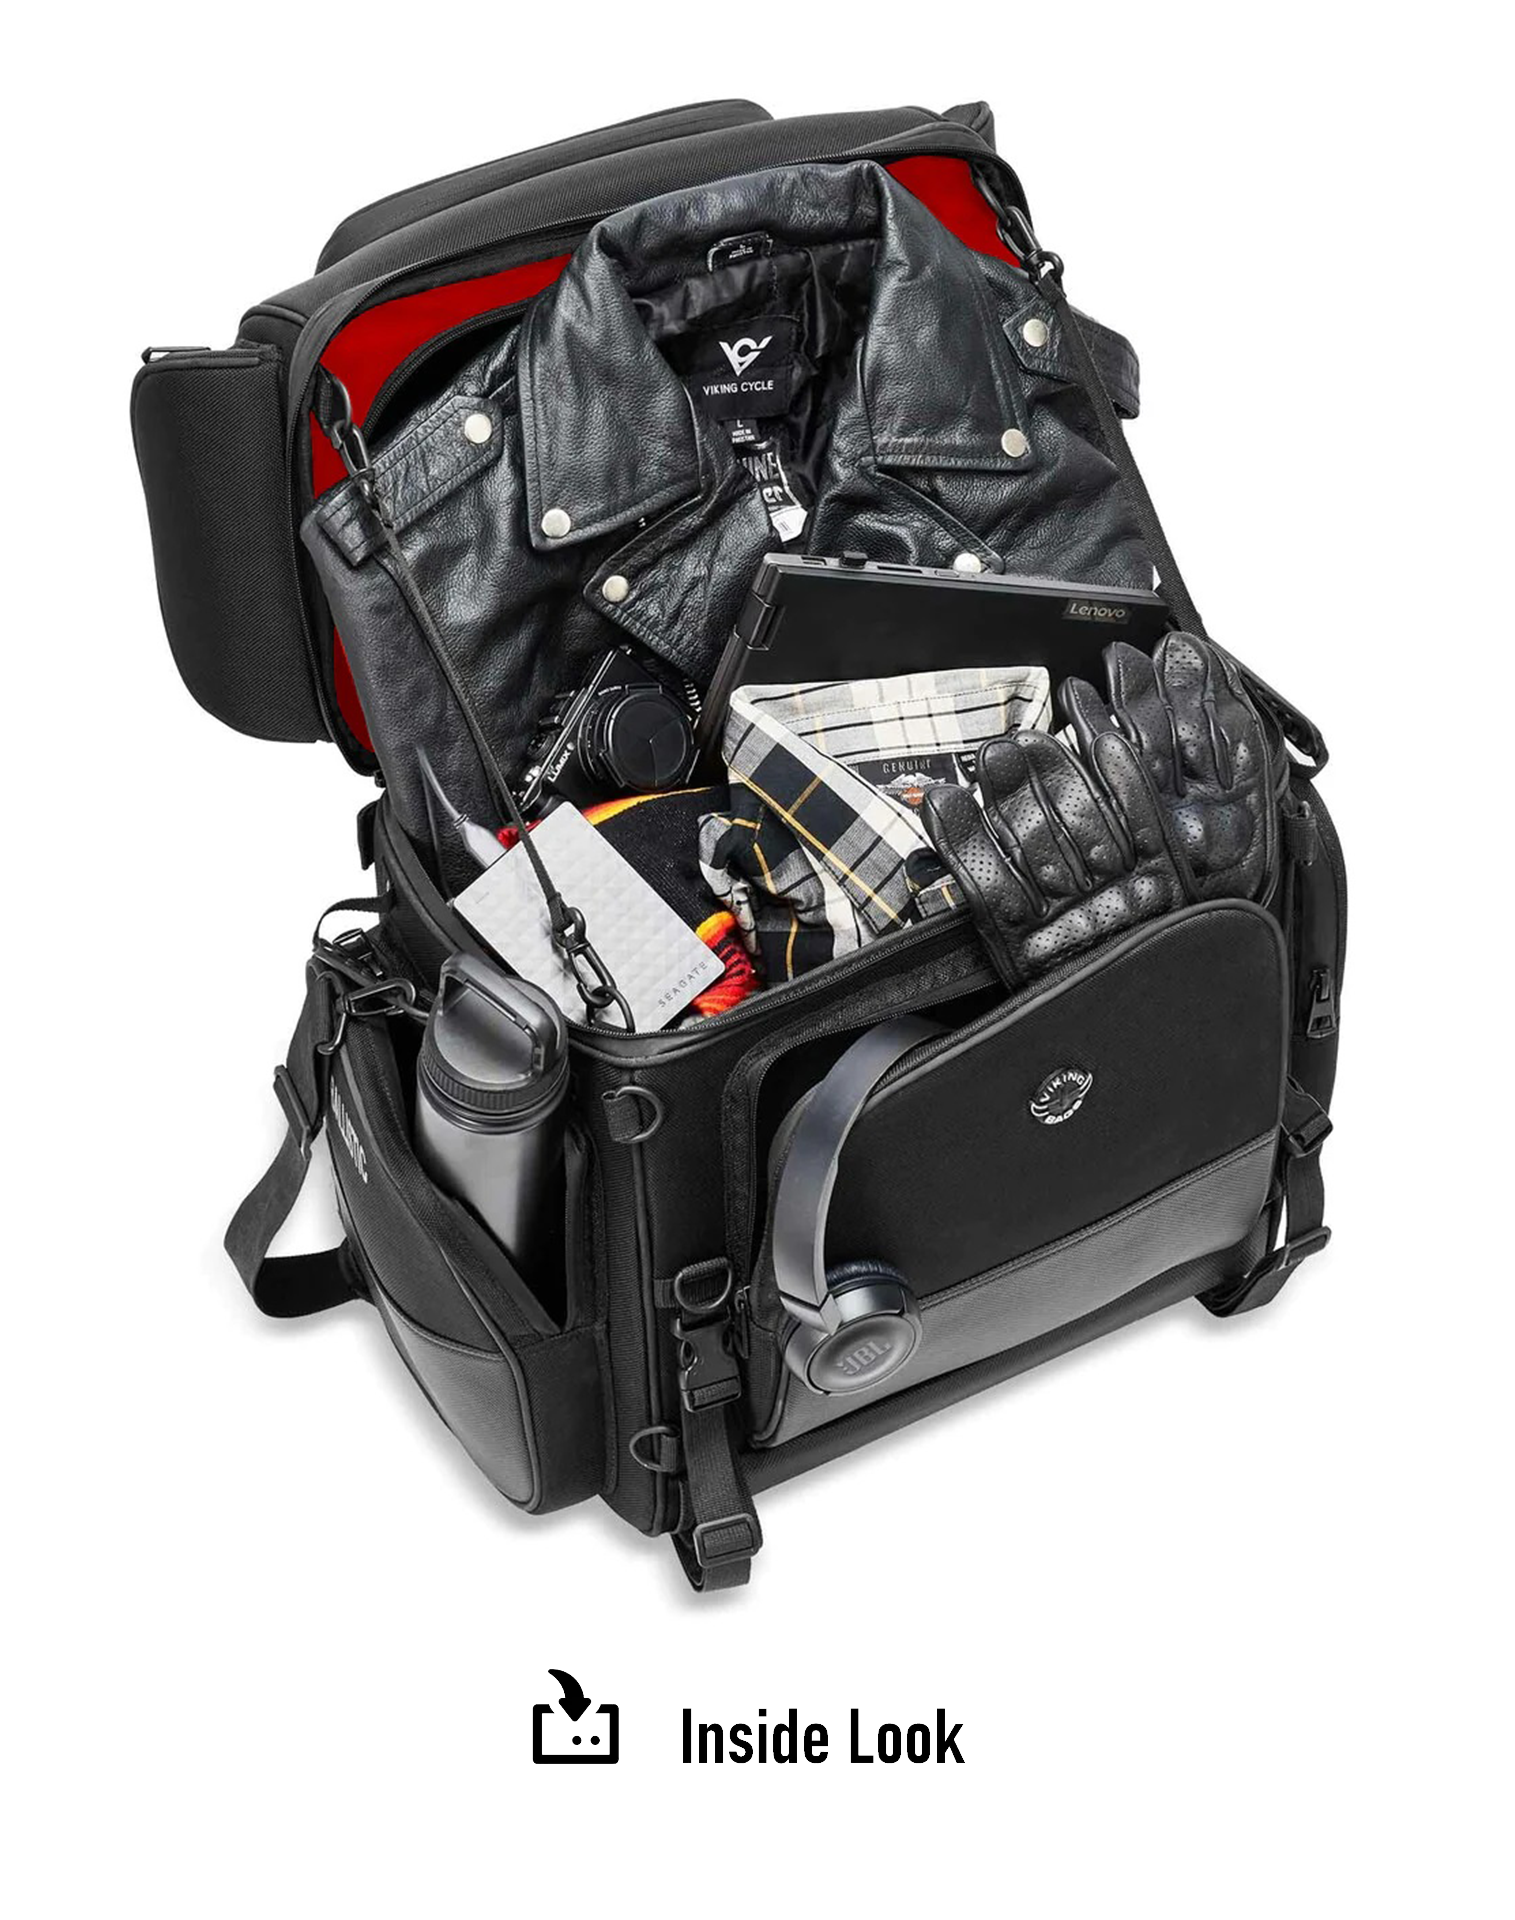 57L - Voyage Premium XL Triumph Motorcycle Sissy Bar Bag